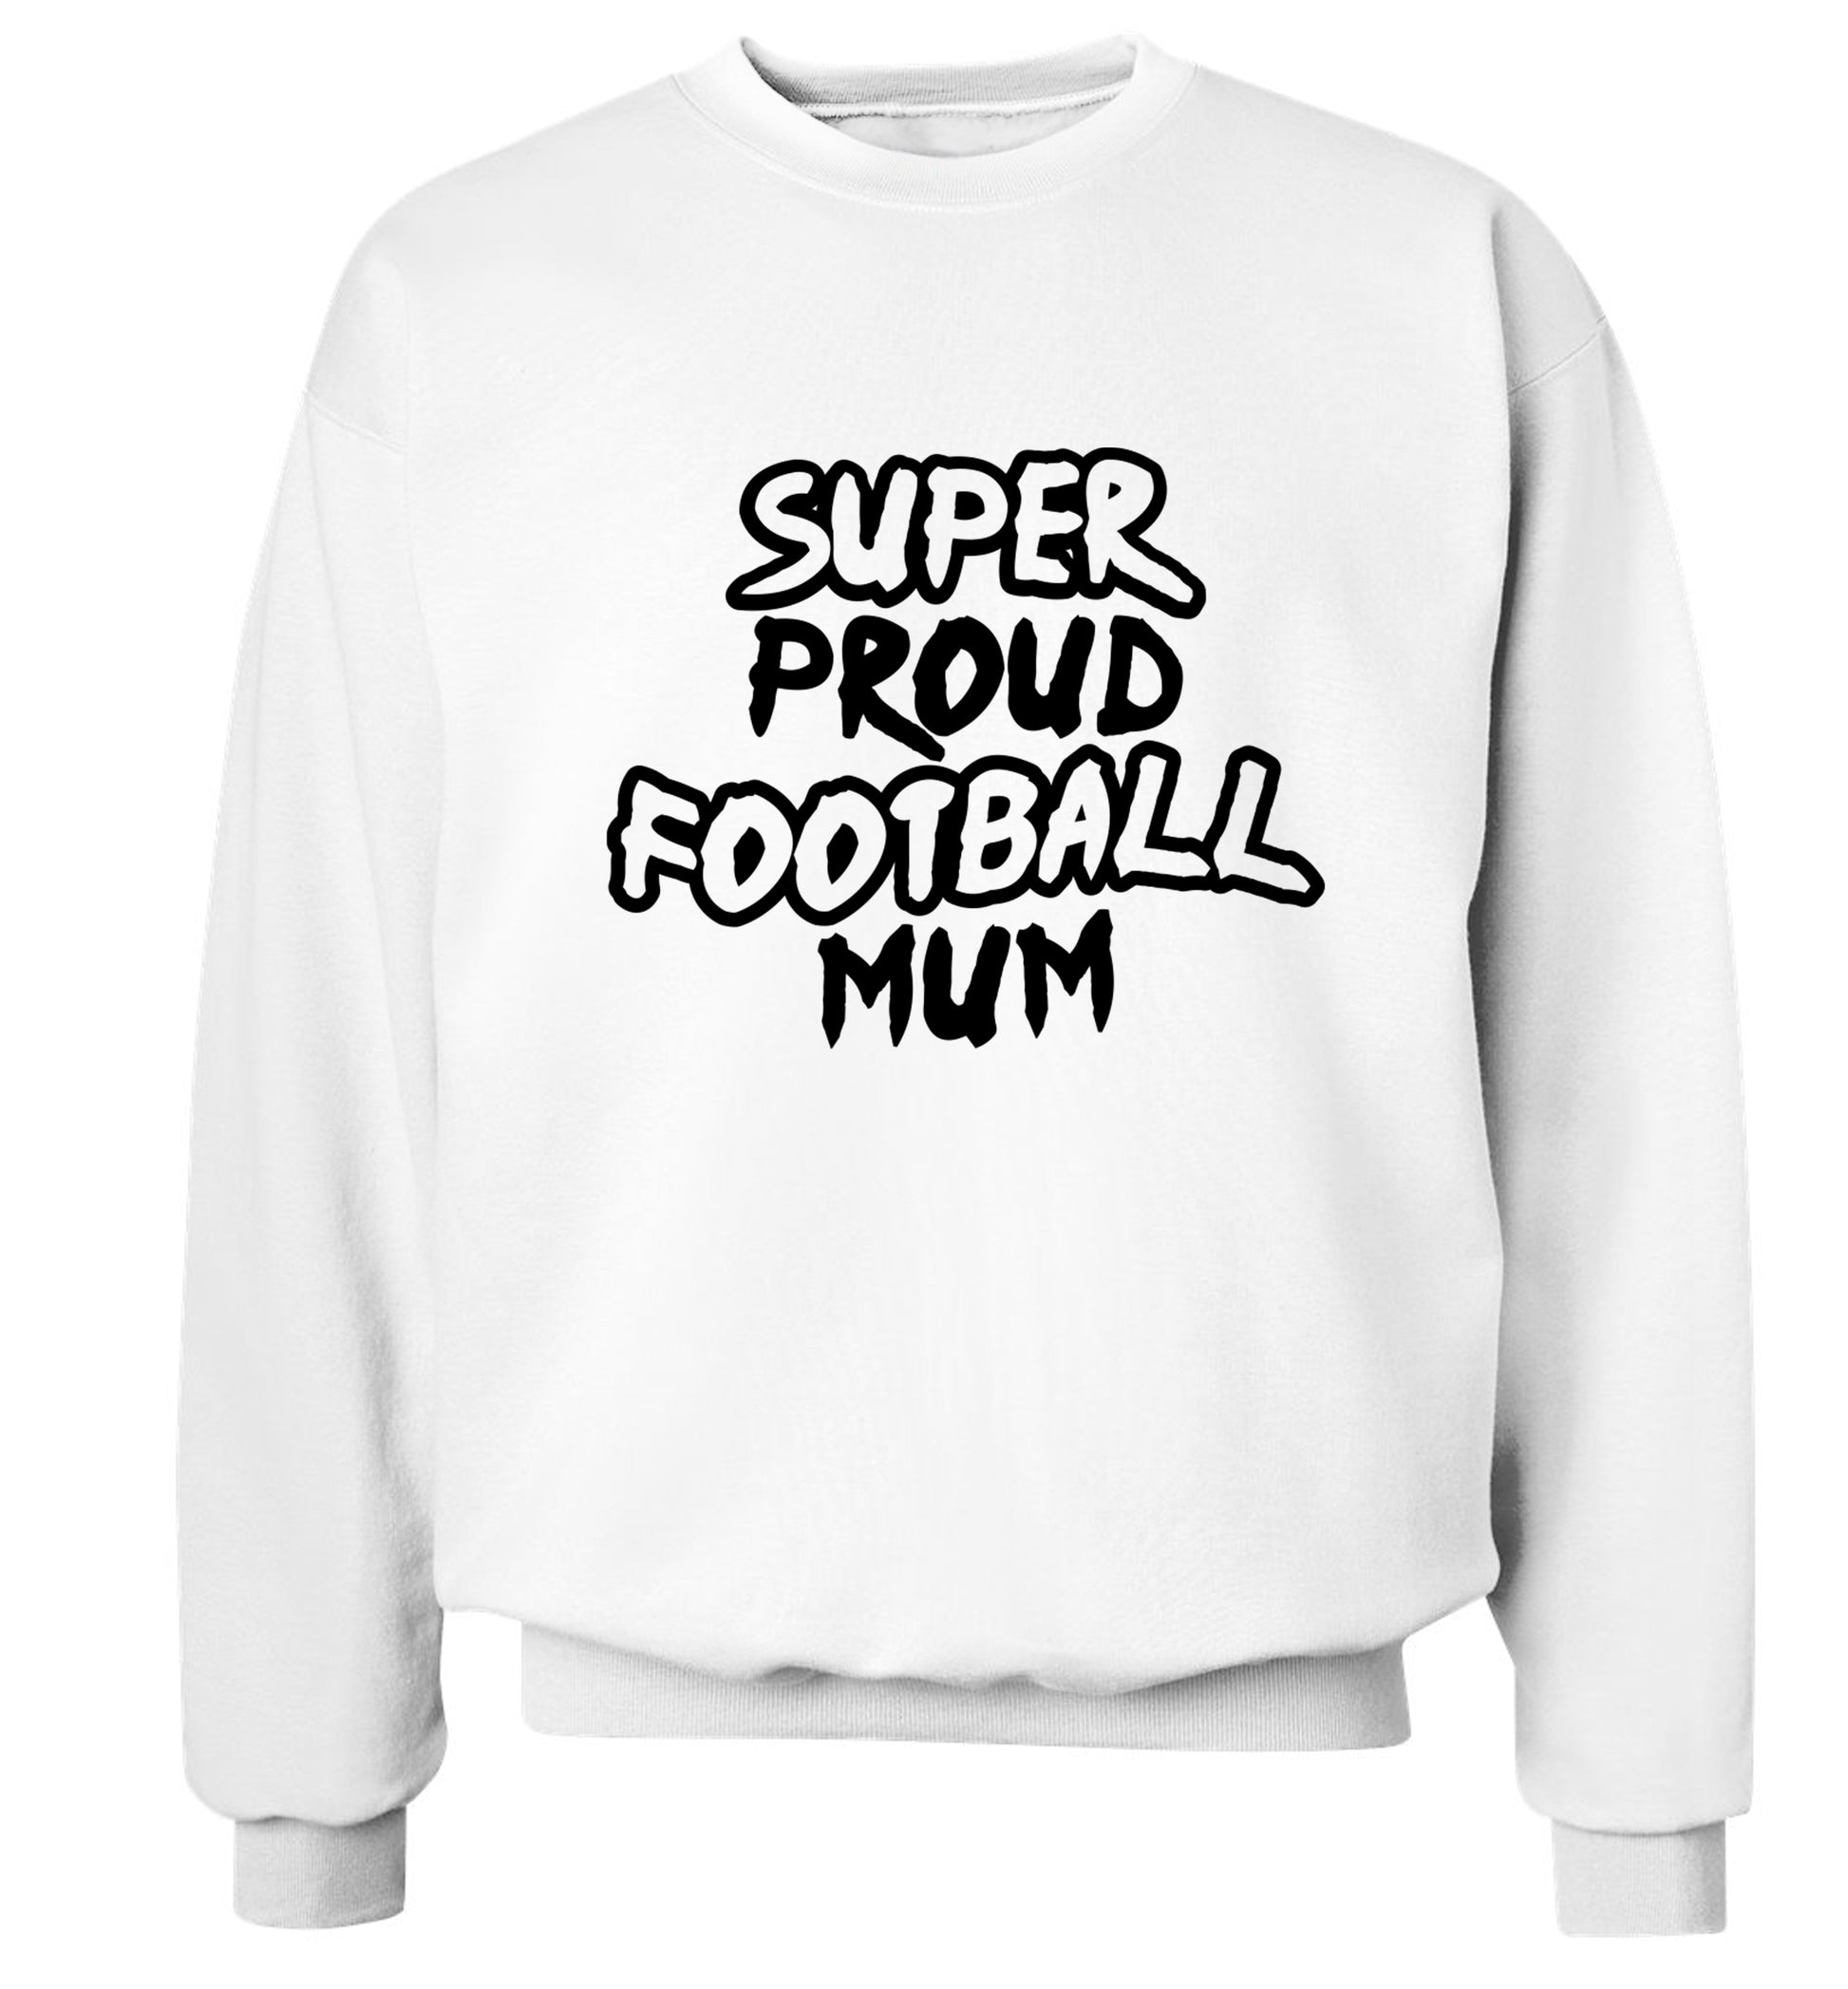 Super proud football mum Adult's unisexwhite Sweater 2XL